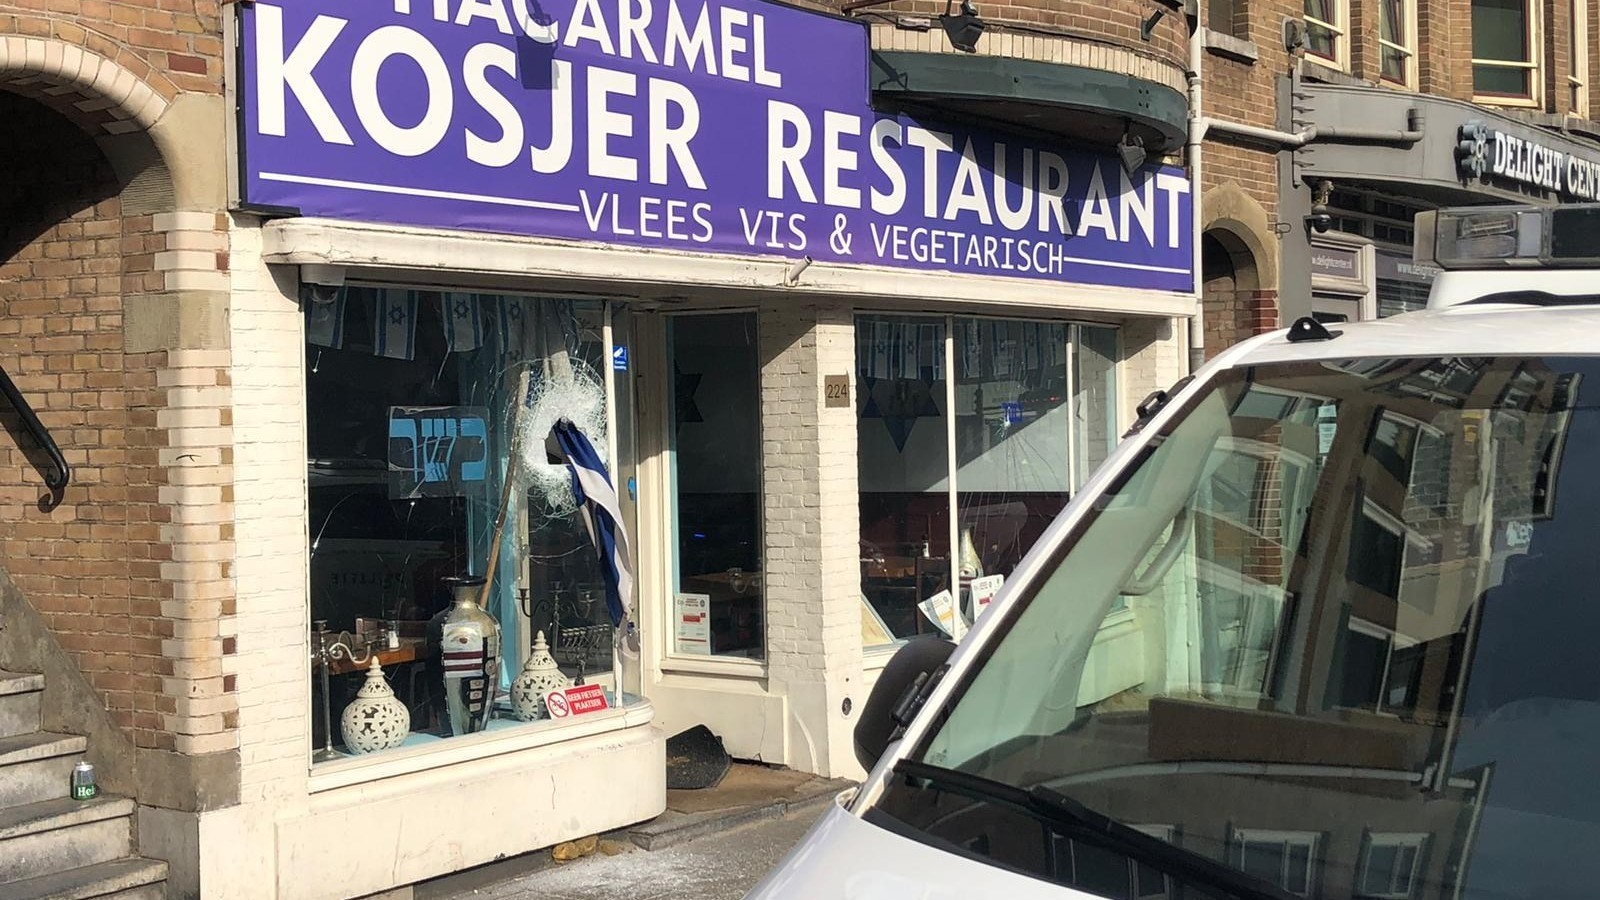 HaCarmel Kosher Restaurant In Amsterdam Vandalism 